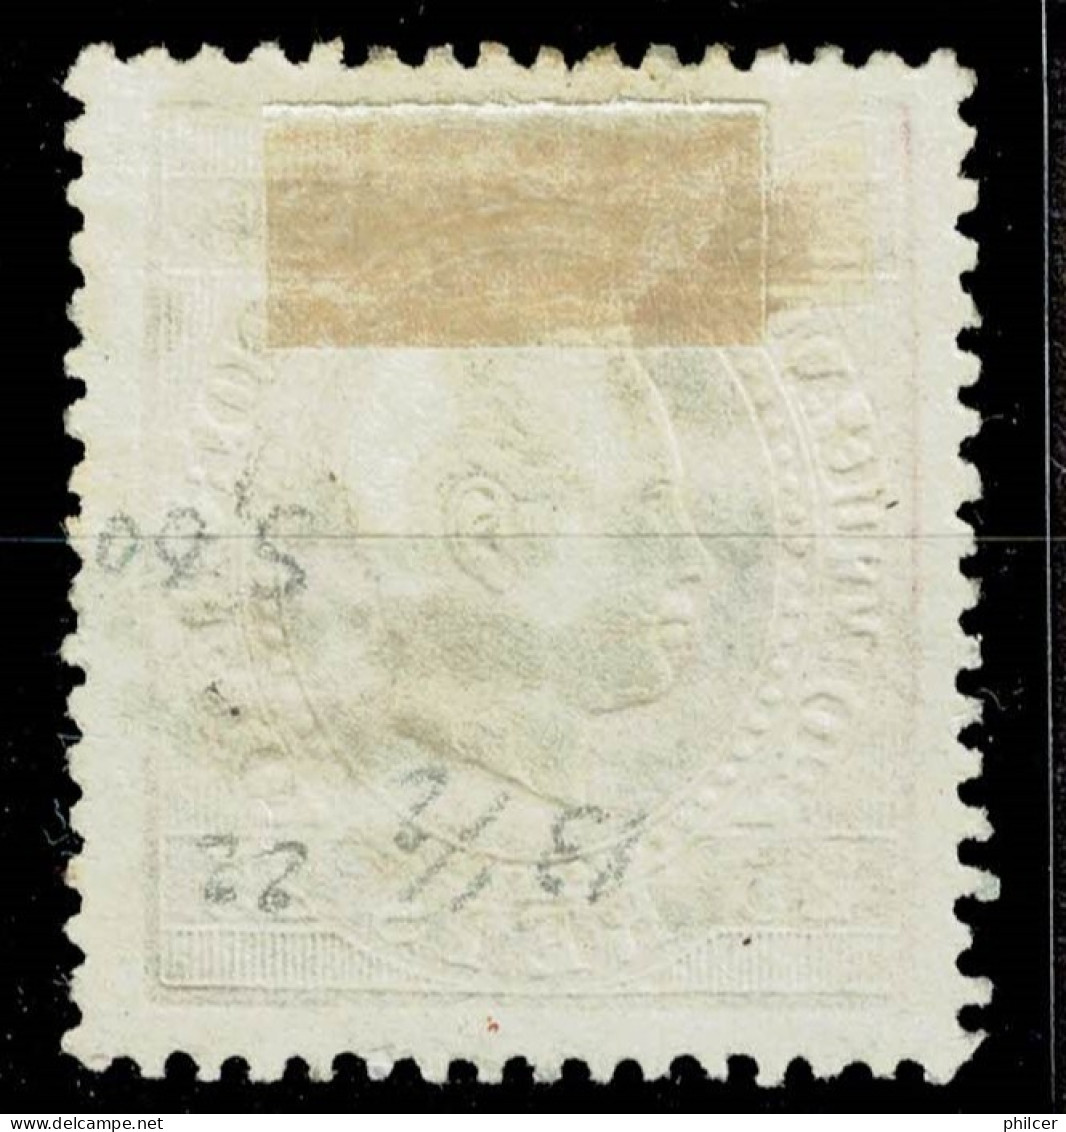 Açores, 1871, # 19f Dent. 13 1/2, Sob. C, Tipo XI, Used - Azores